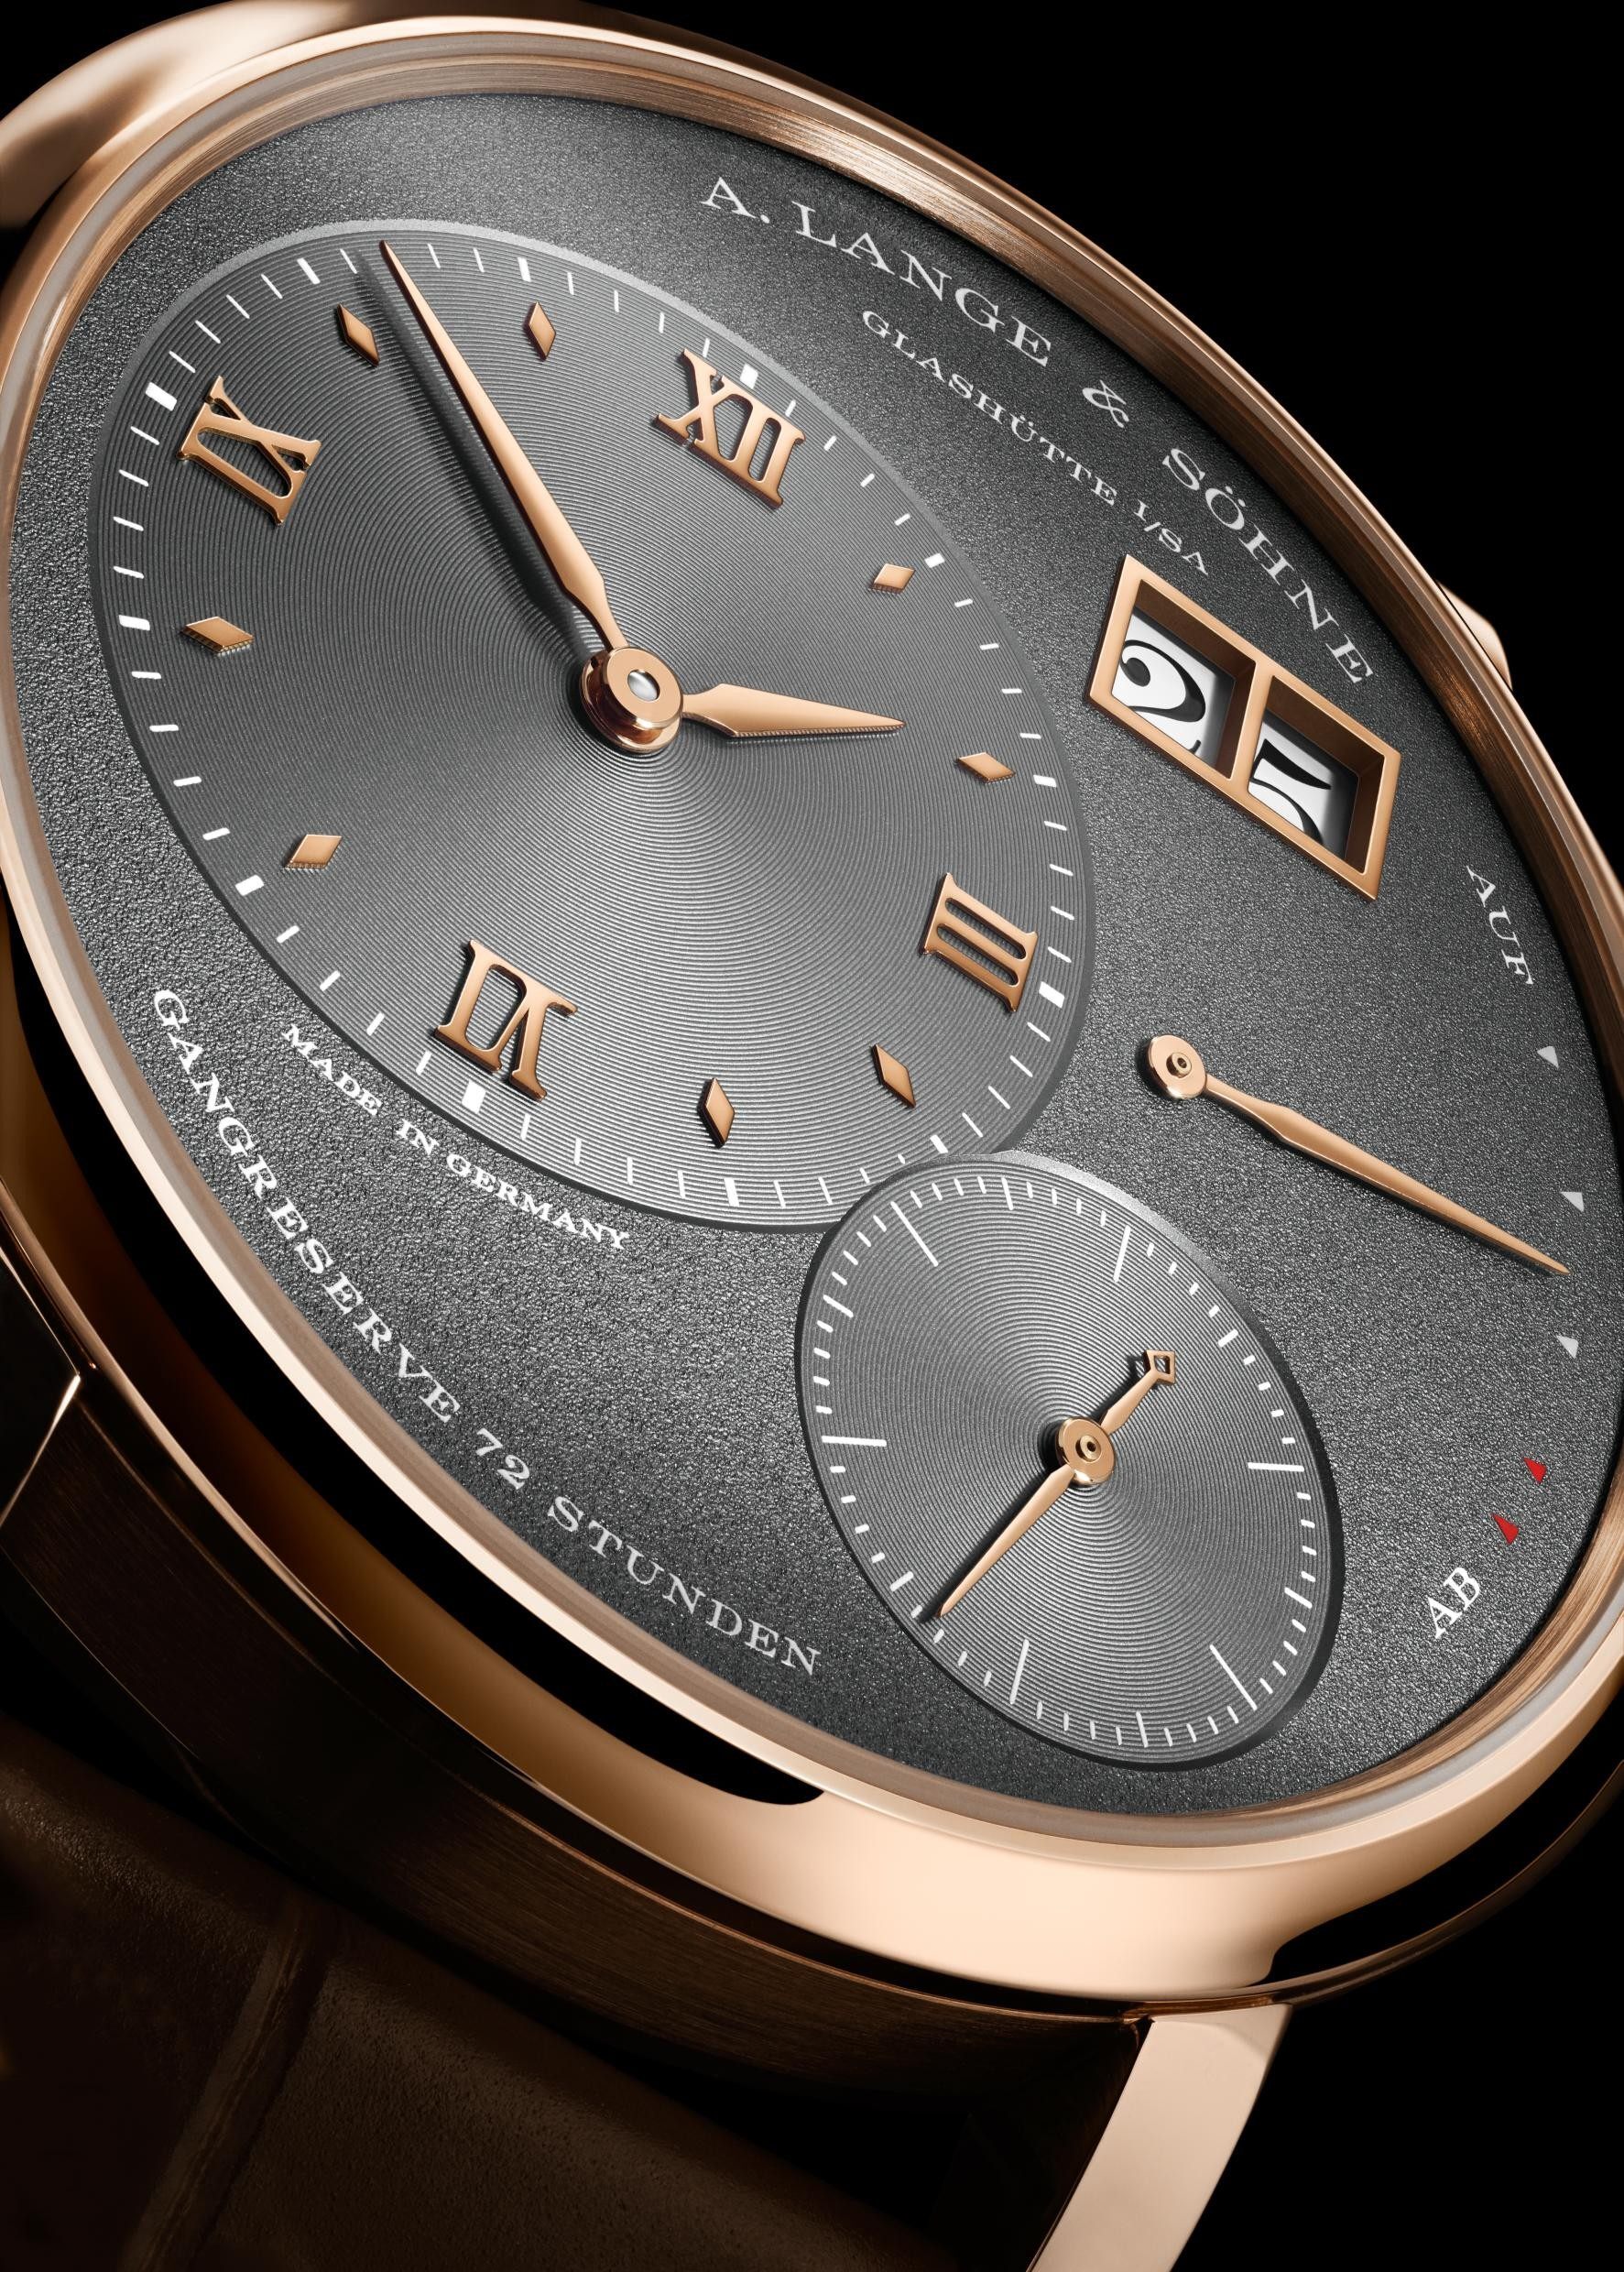 Hermès - Cape Cod Dual Time Zone Nantucket Watch – Every Watch Has a  Story